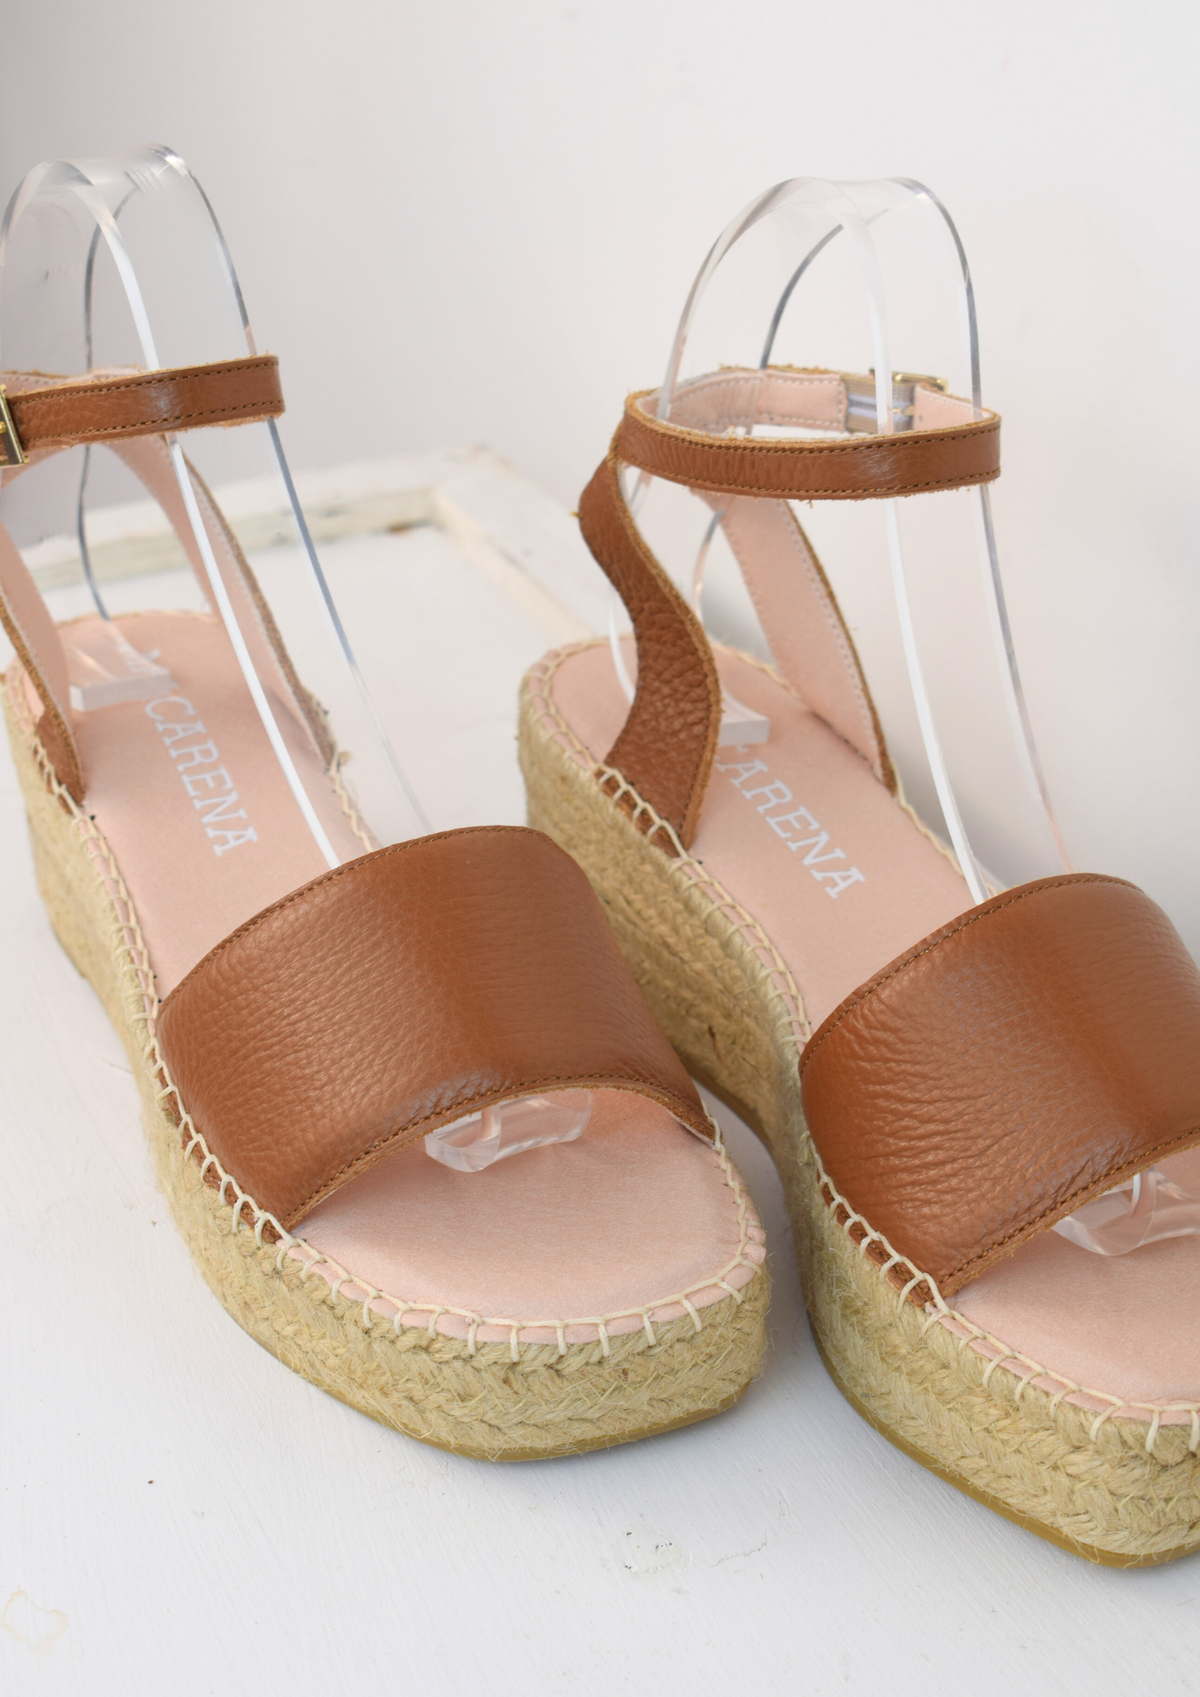 Raffia flatform sandel with tan leather toe and ankle strap 